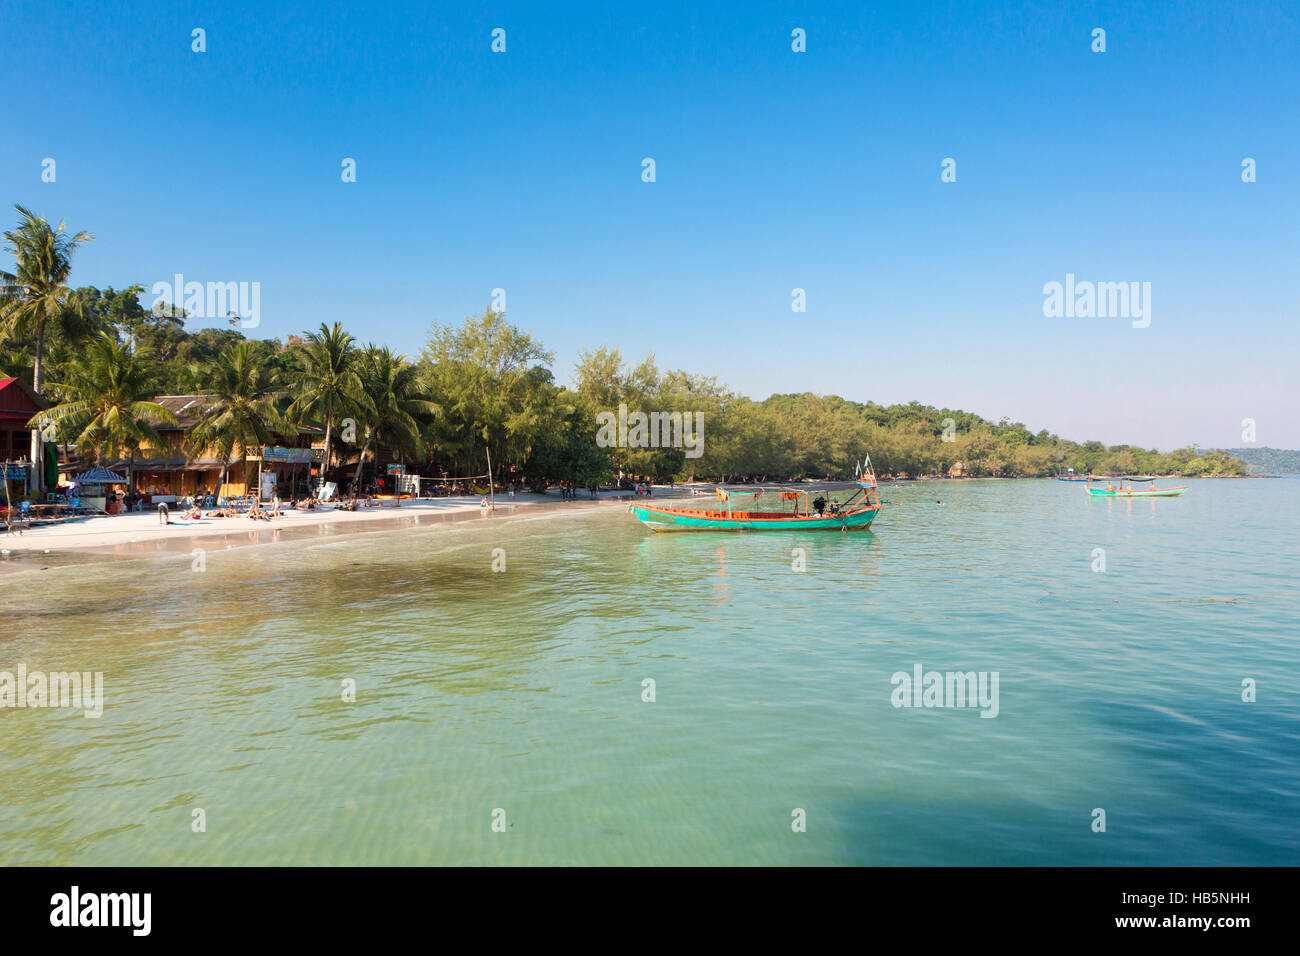 Mit Stadtblick mit Khmer Boote, Strand von Koh Rong. Kambodscha Stockfoto